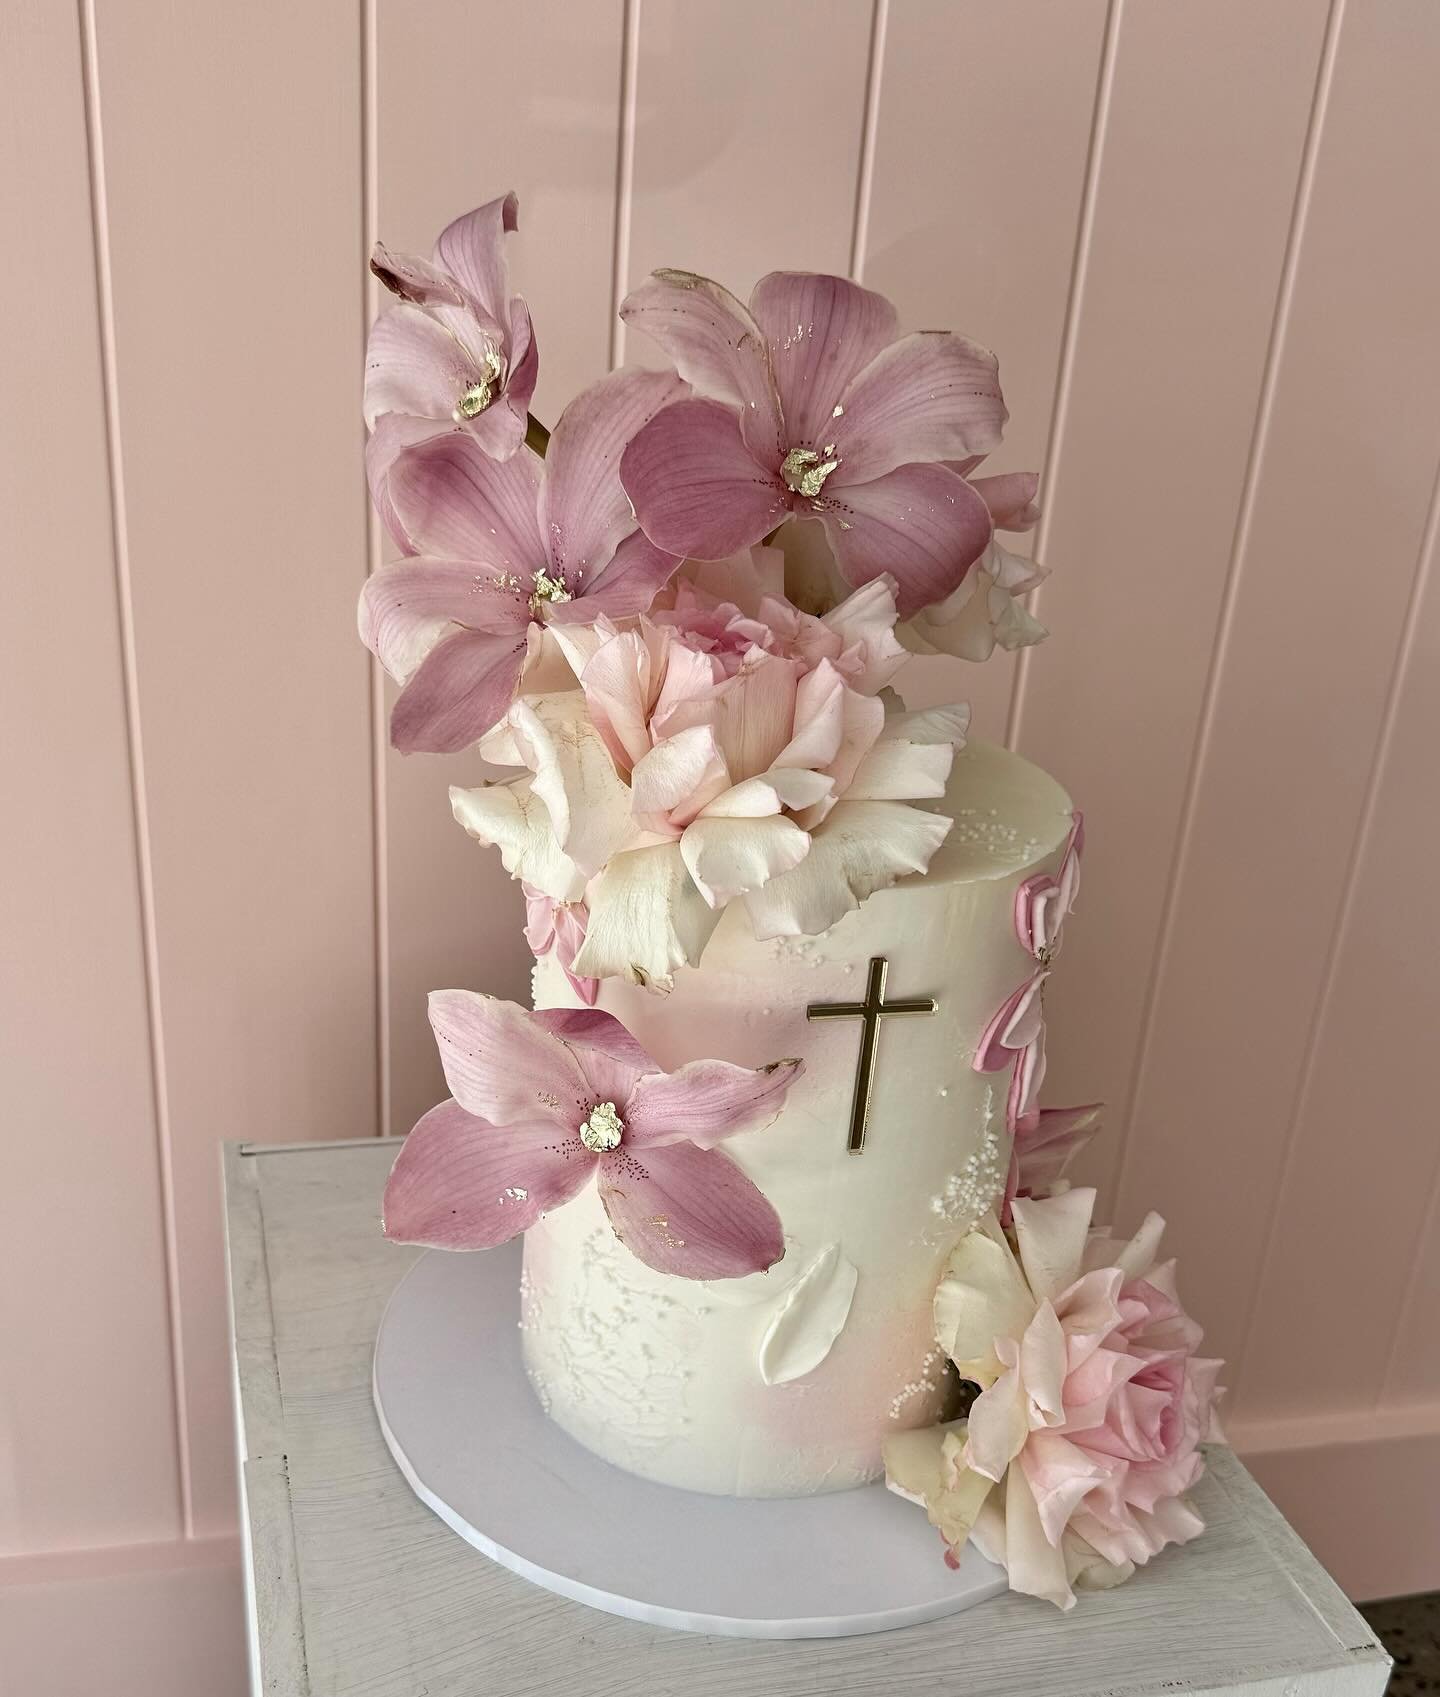 Pretty floral christening with textured frosting and gold accents 
.
.
#christeningcake #christeningcakesydney #baptismcakesydney #cakelover #cakeporm #cakepormsydney